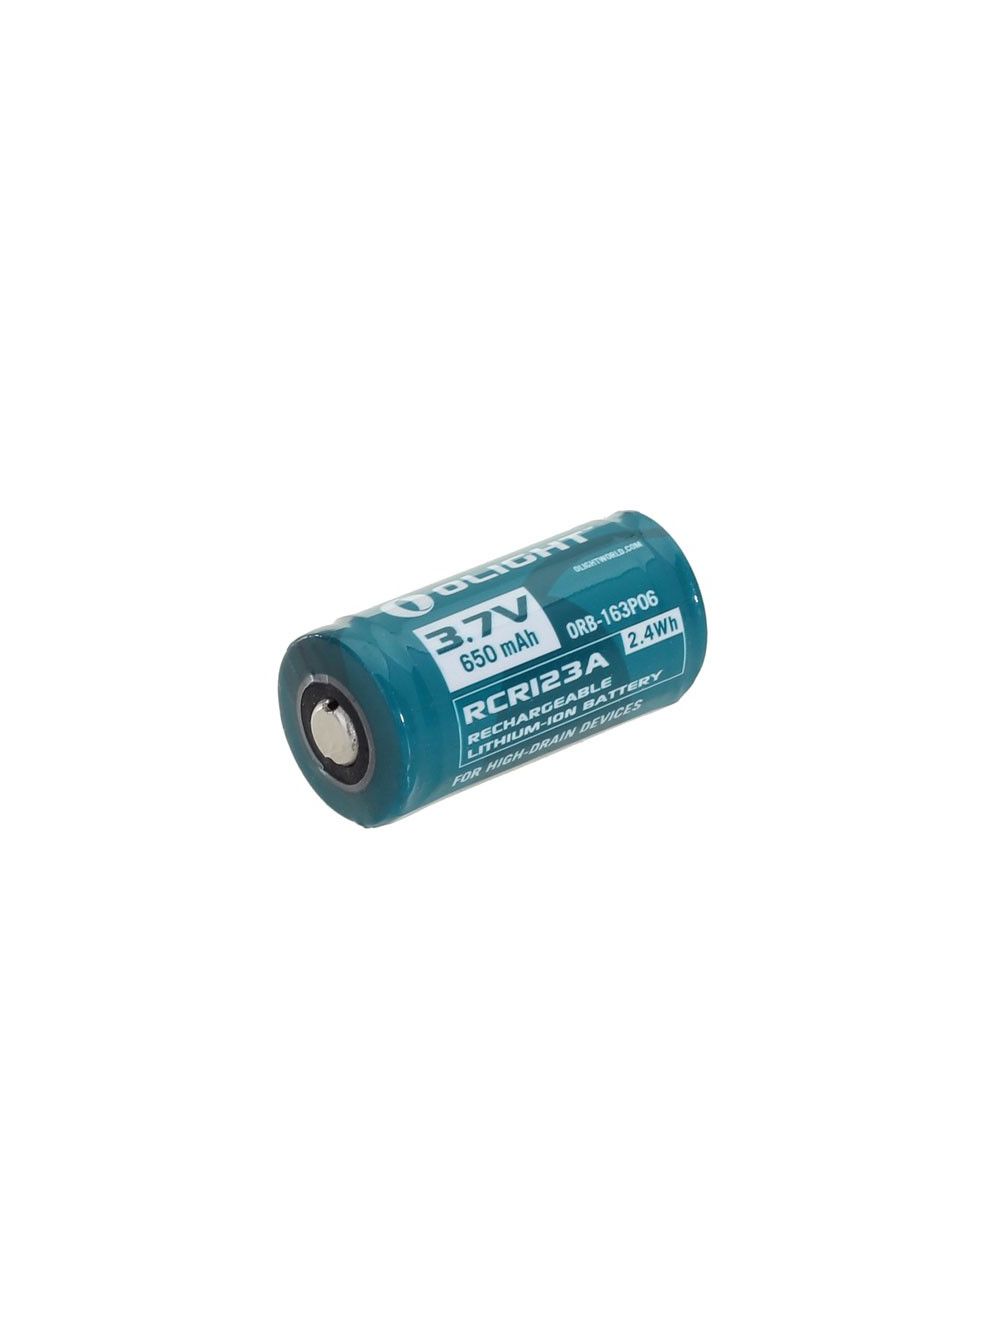 Oplaad batterij Olight RCR123A 3.7V 650mAh nu € 9.95 | | De specialist in Olight het Batterijen assortiment| Rien de